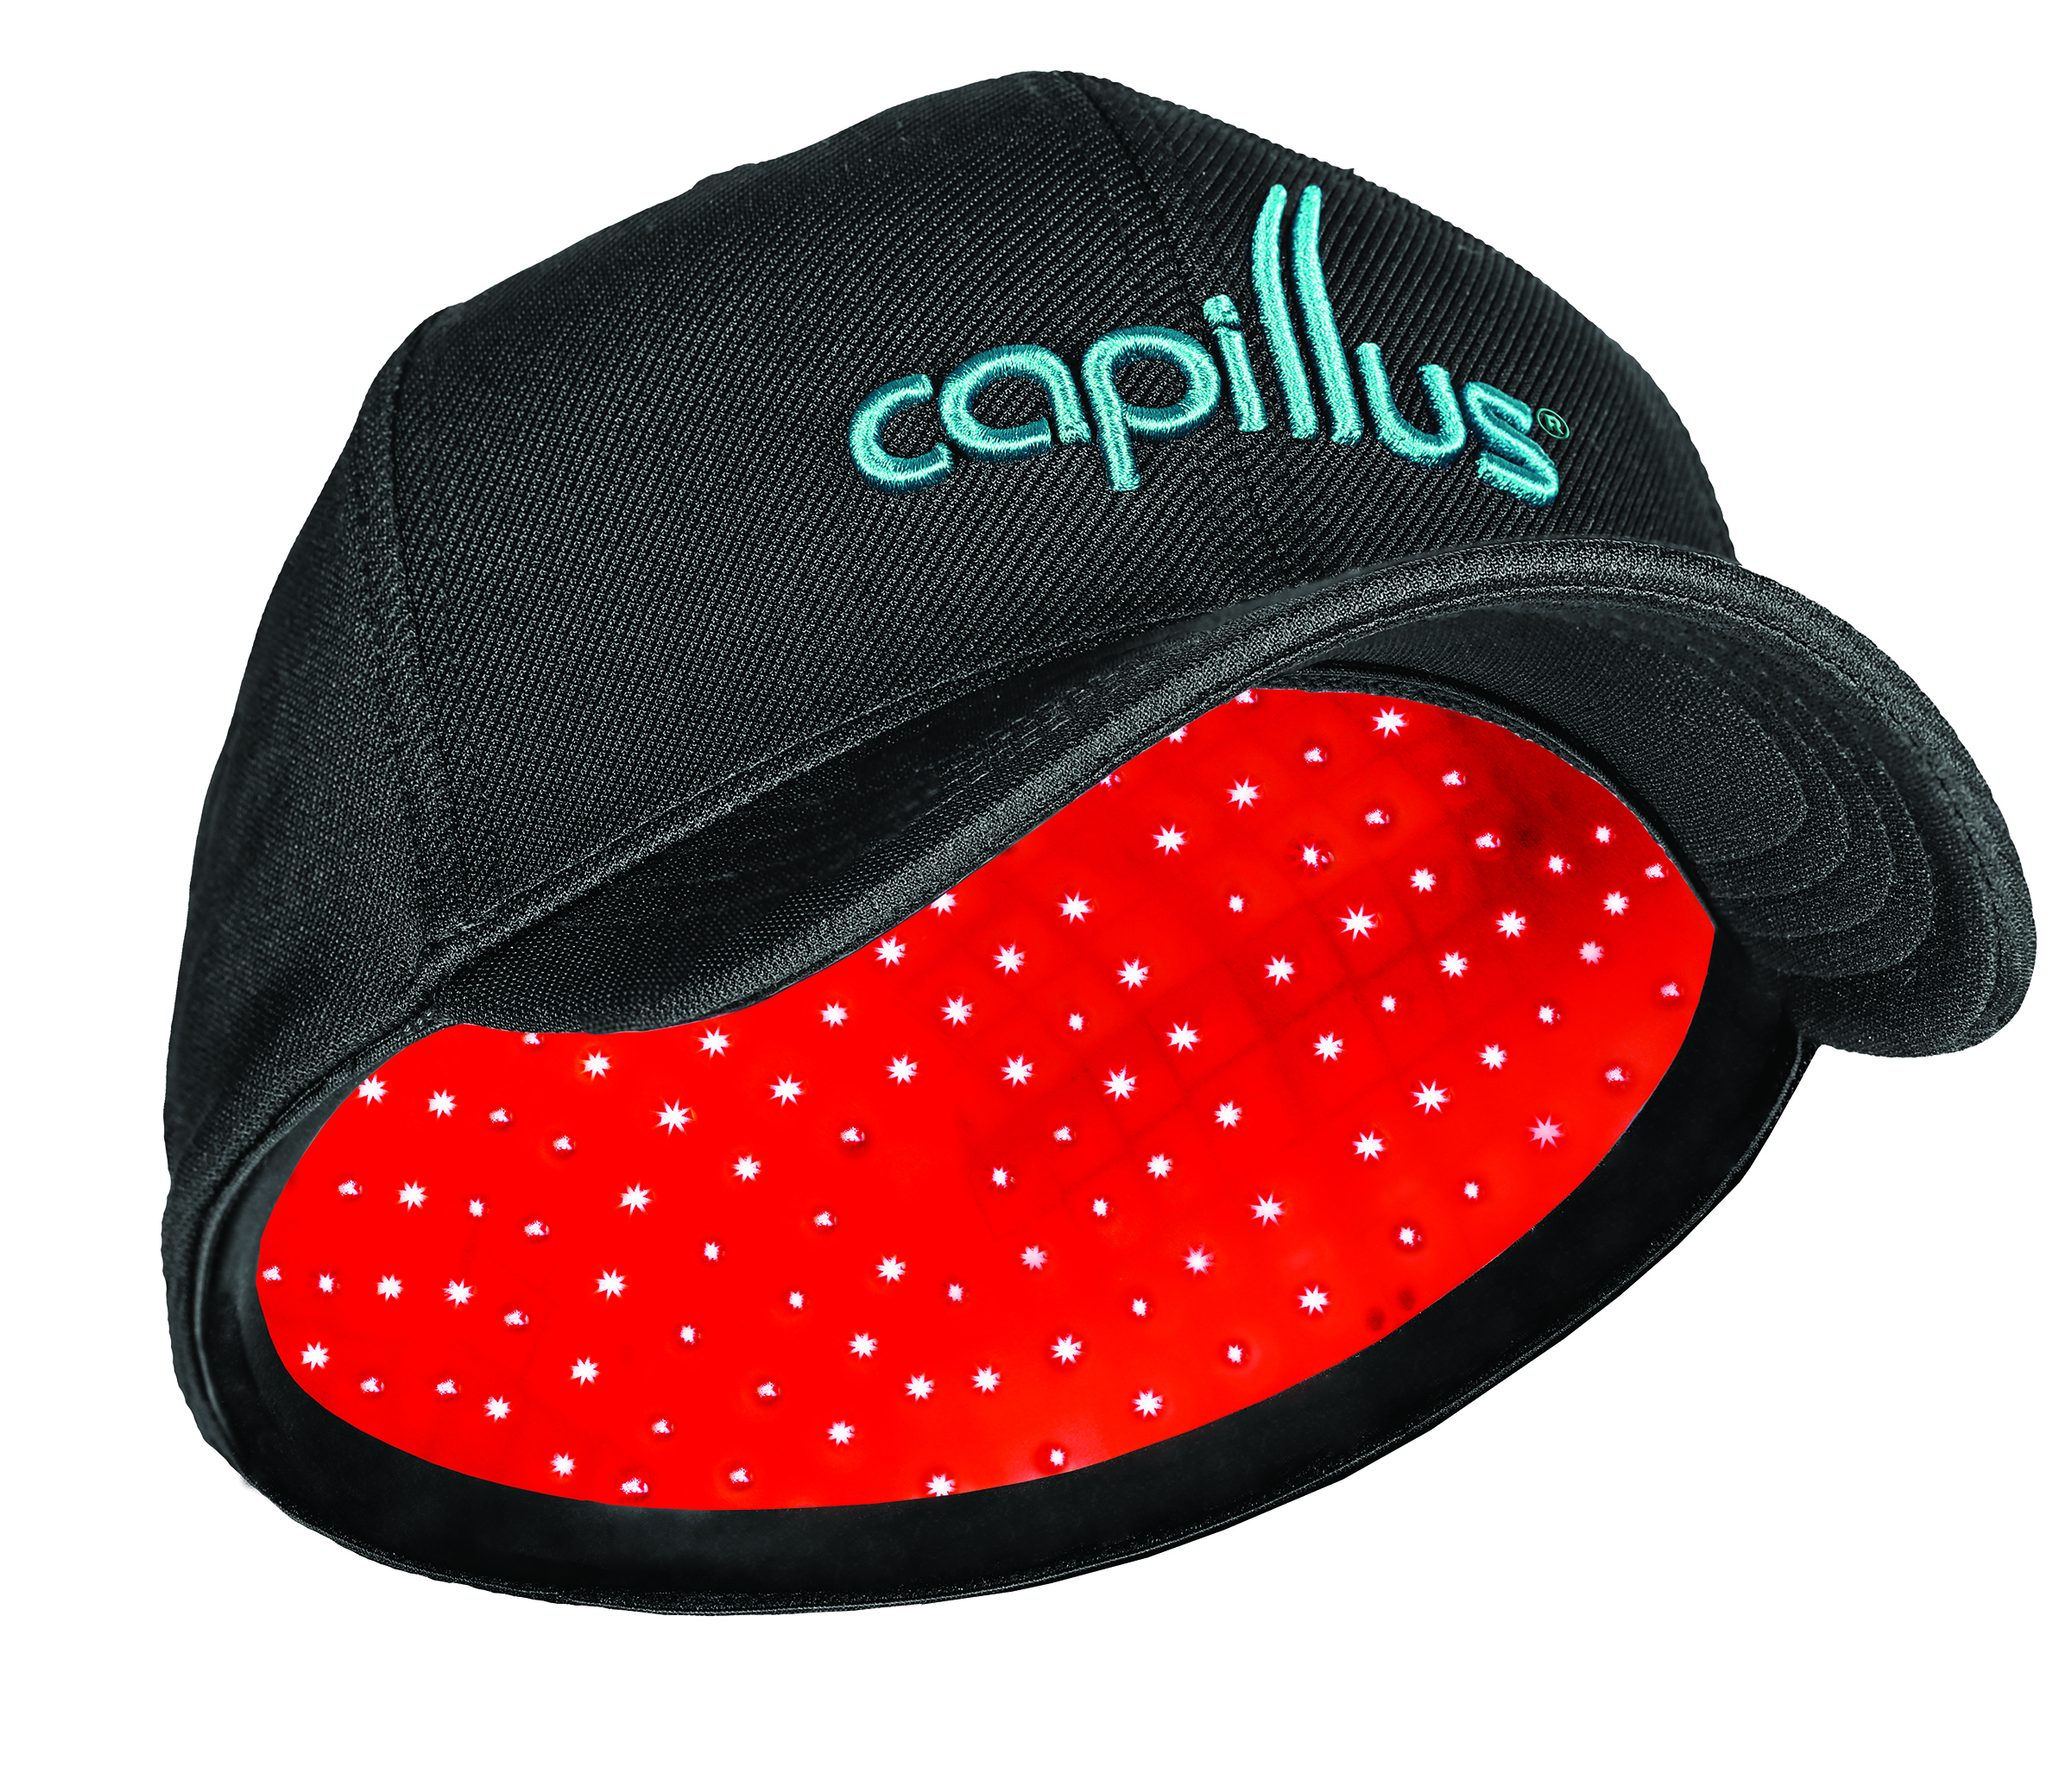 Capillus Pro Lazer Kep